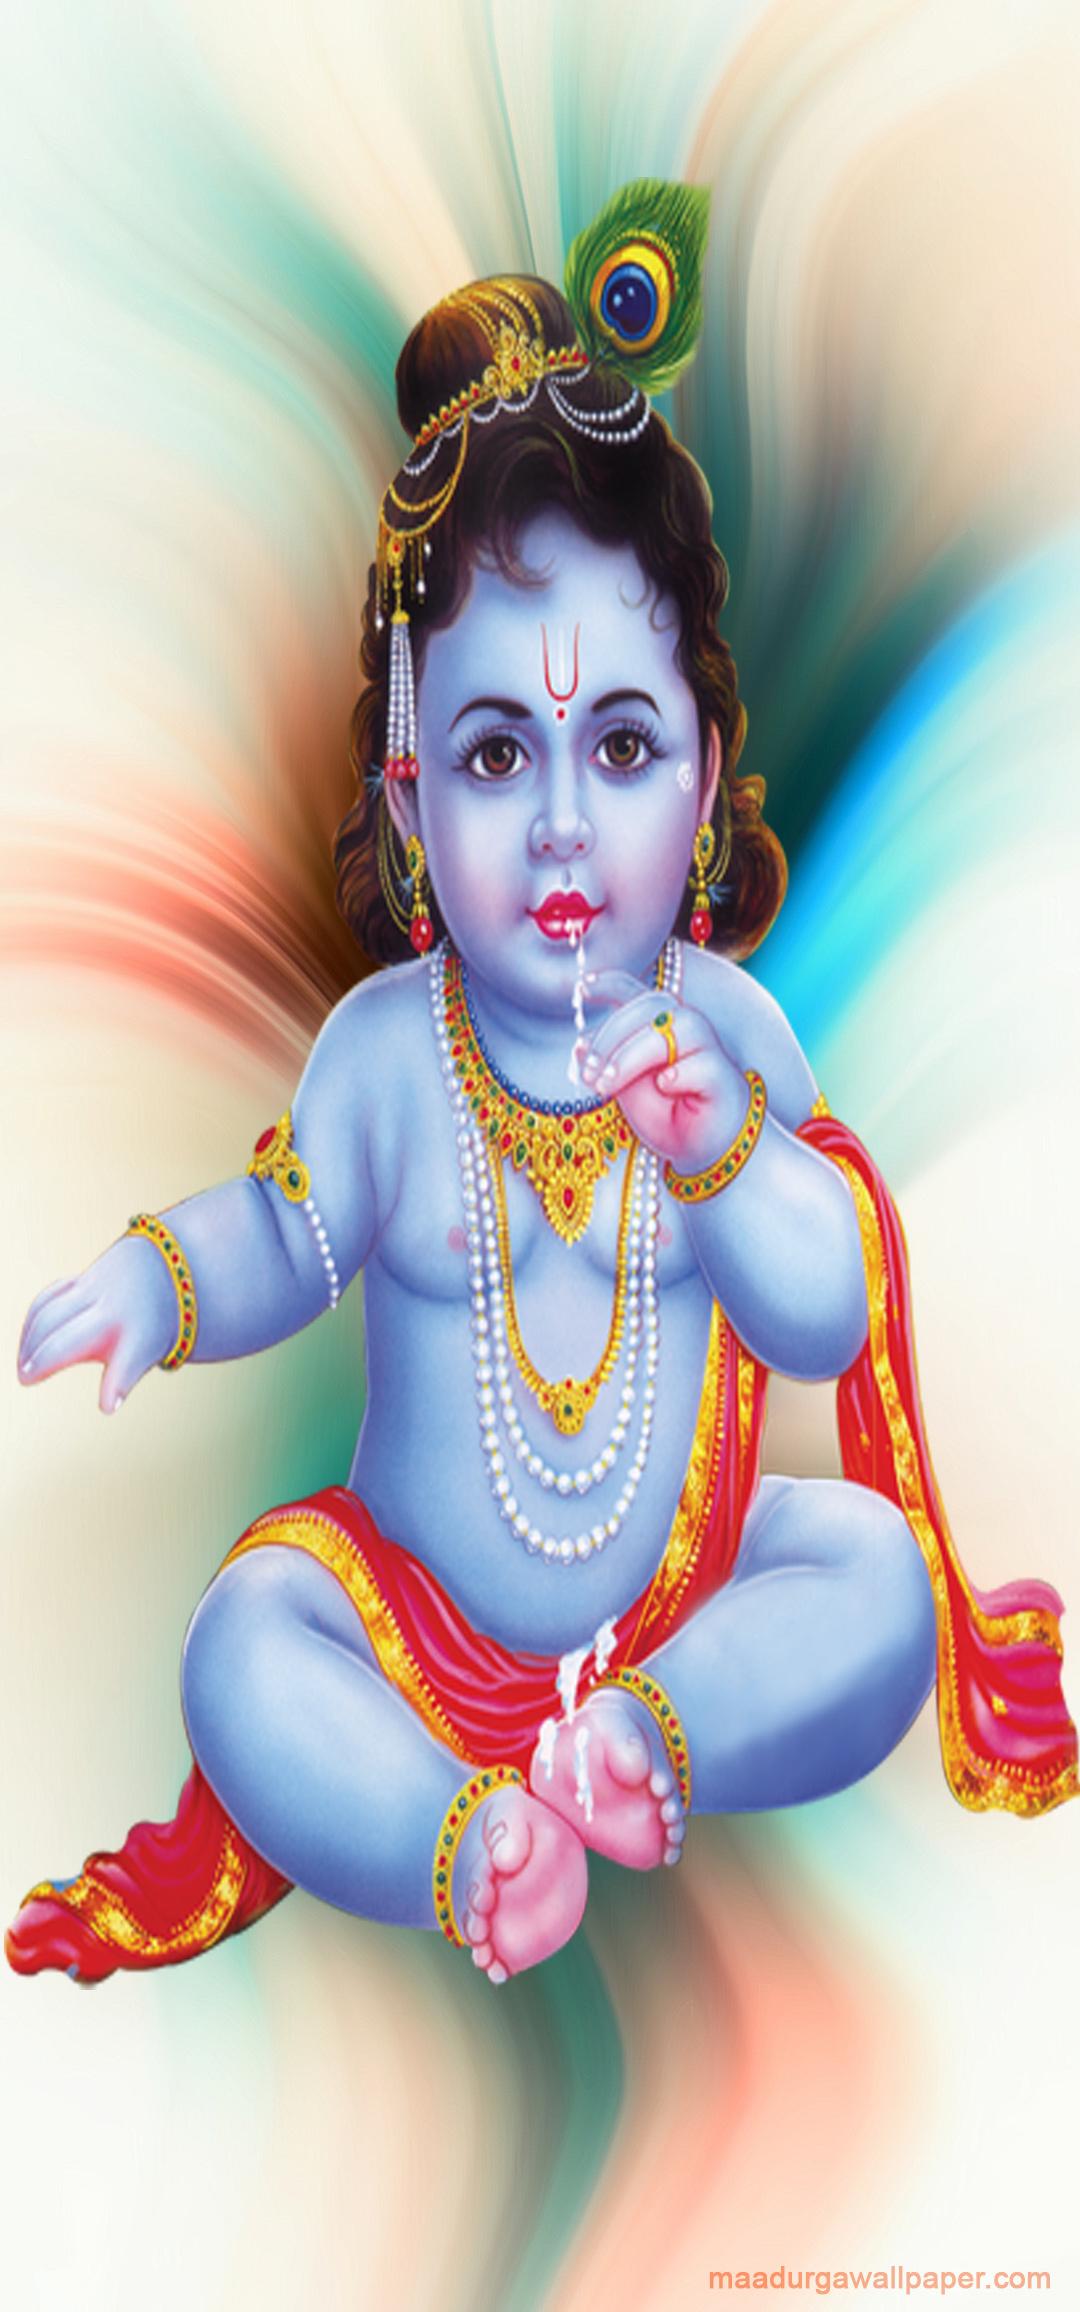  Lord Krishna Standing Mobile Phone Wallpaper  MyGodImages